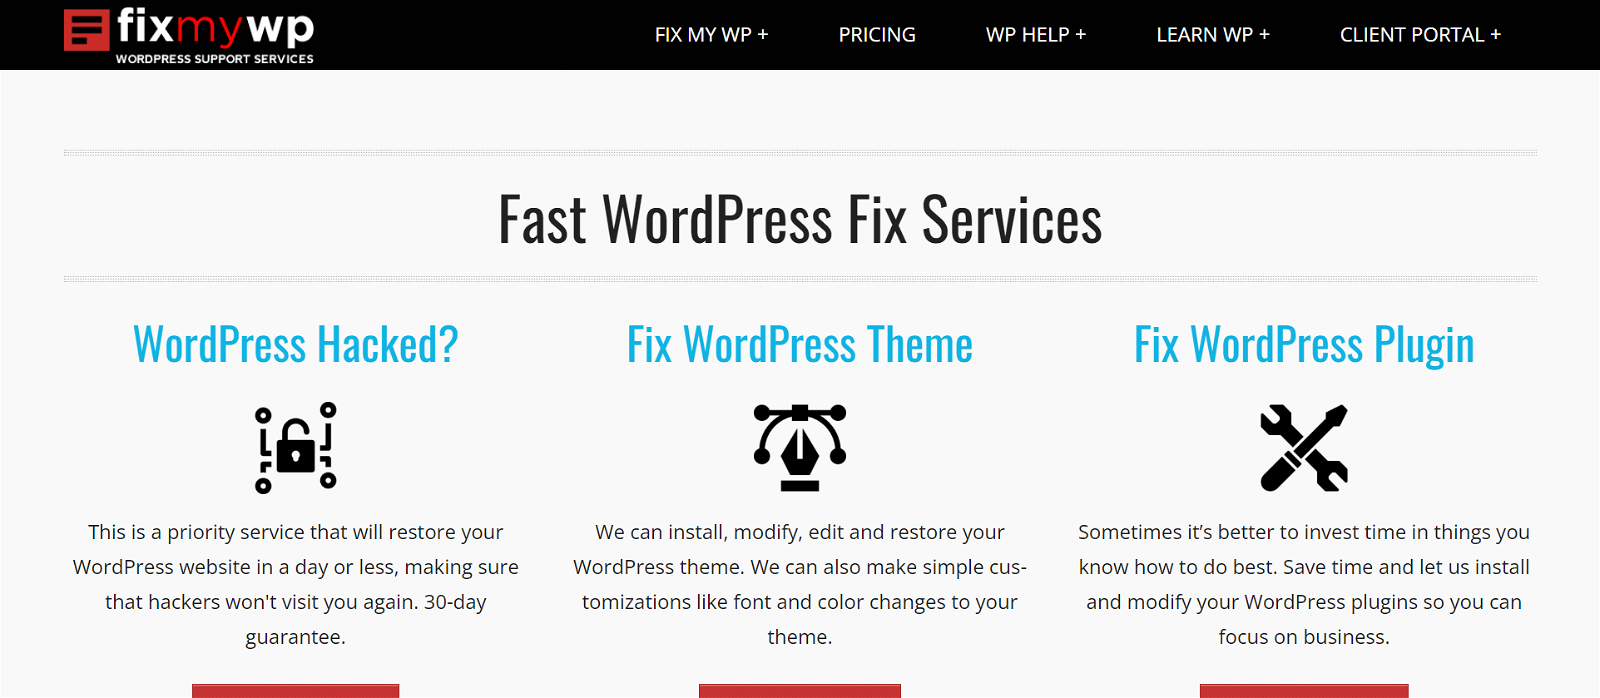 FixMYWP WordPress services